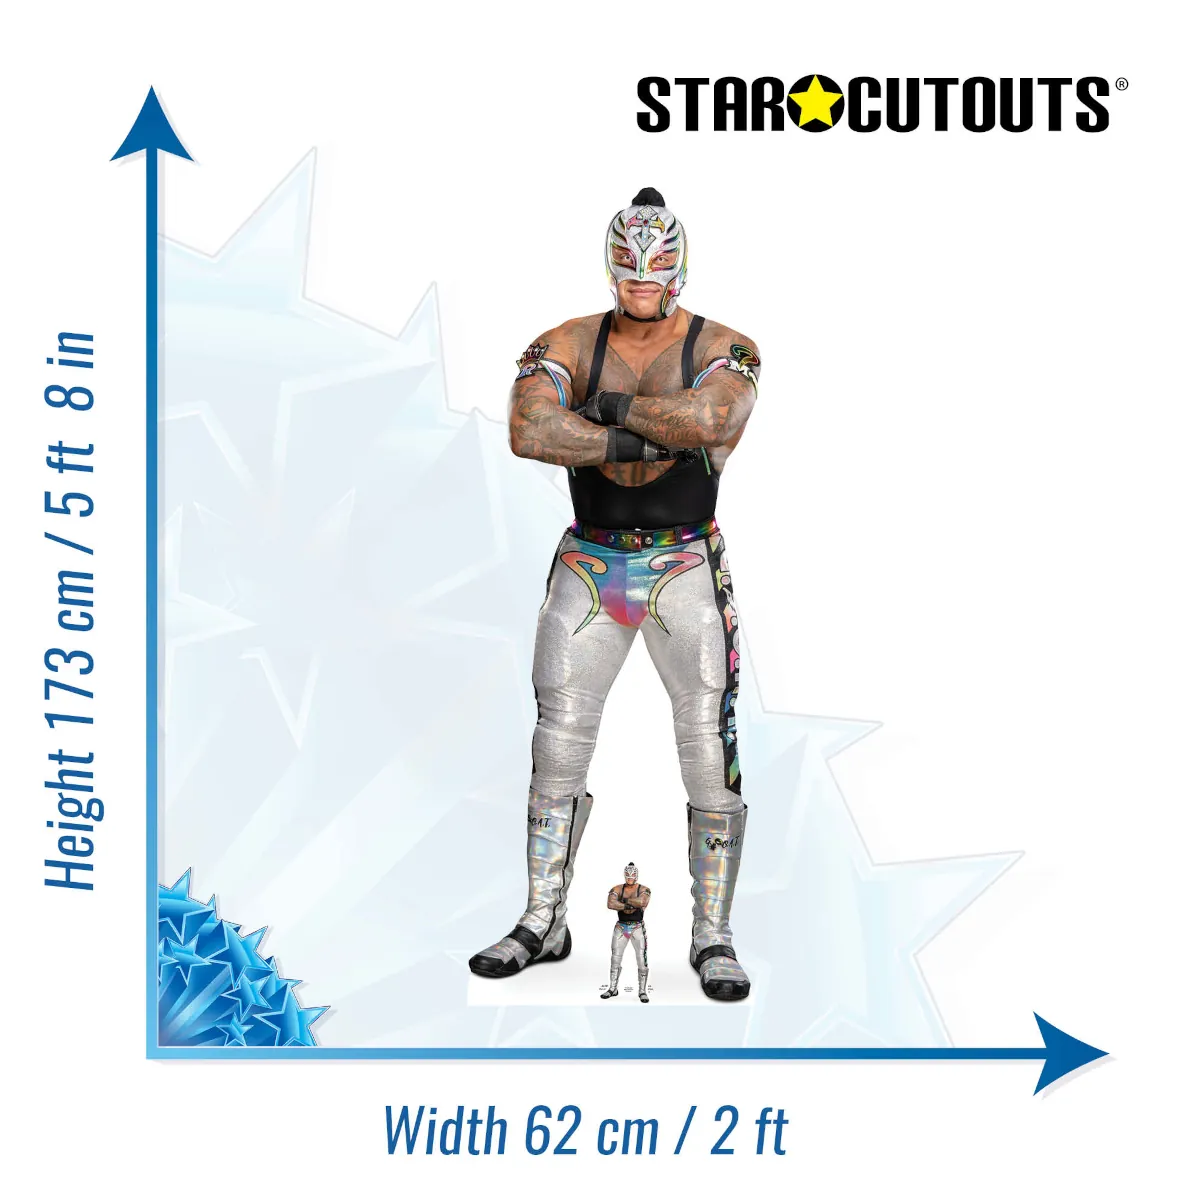 SC4430 Rey Mysterio (WWE) Official Lifesize + Mini Cardboard Cutout Standee Size